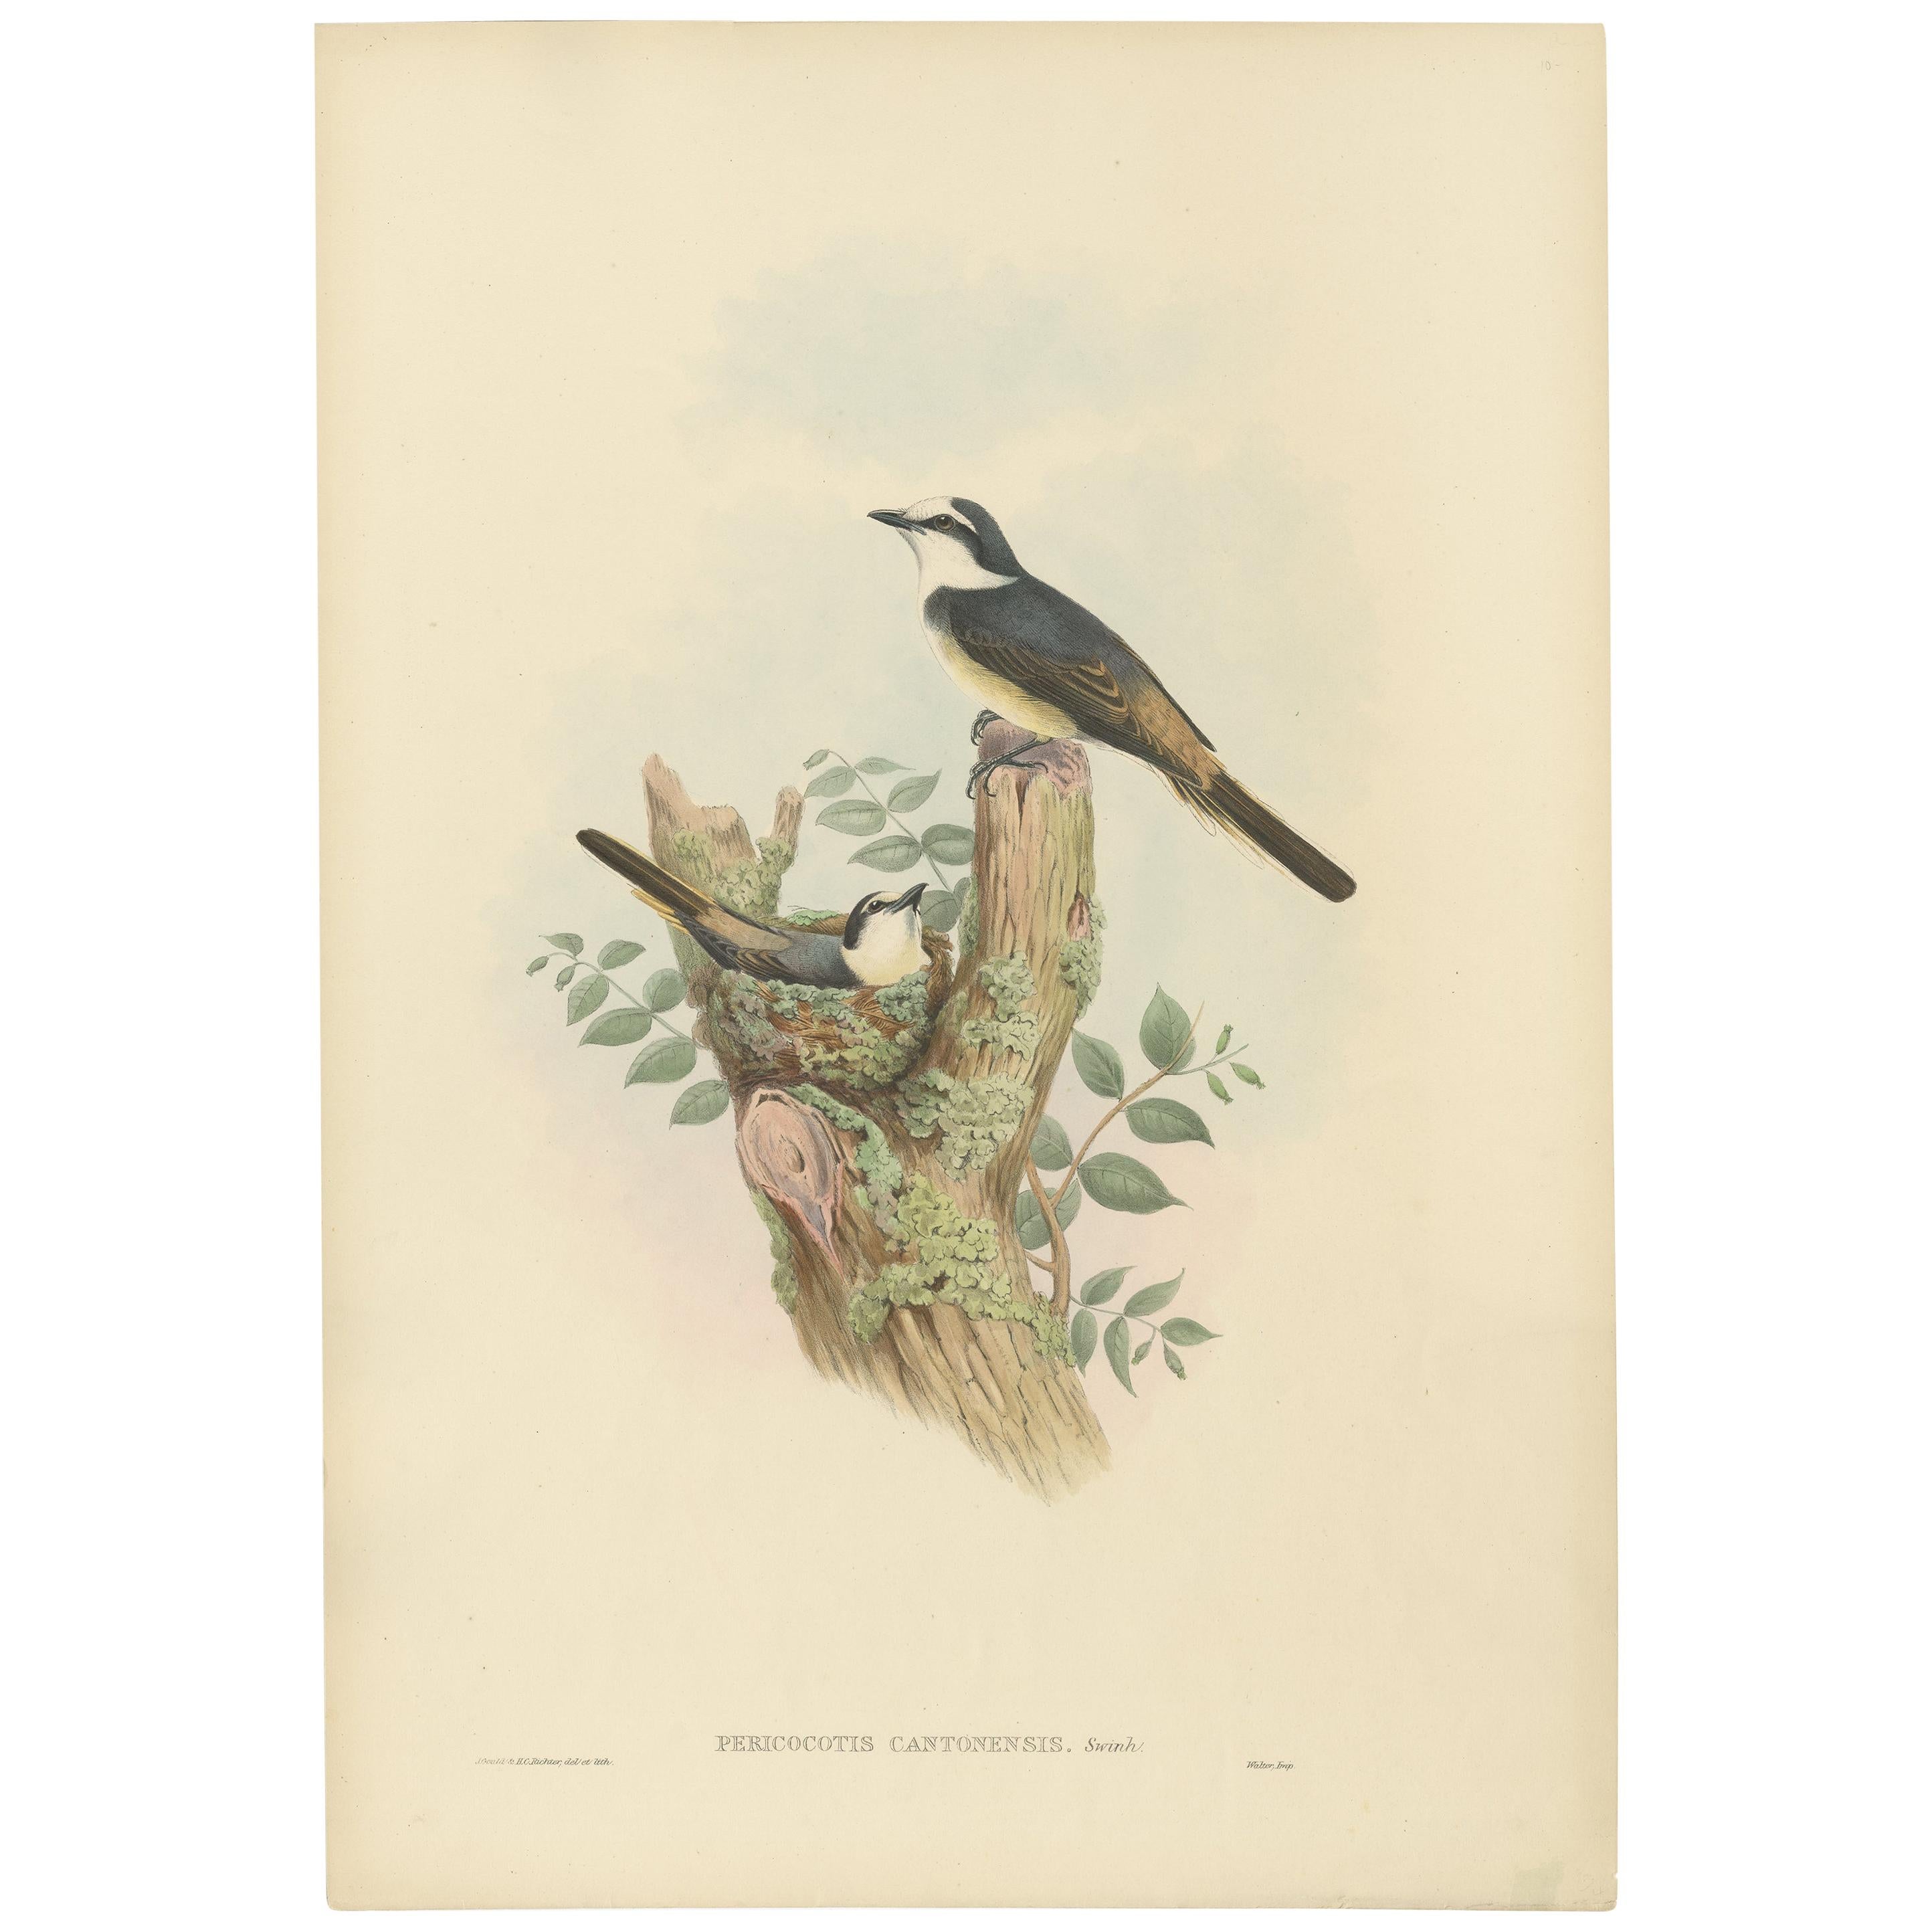 Antique Bird Print of the Swinhoe's Minivet by Gould, circa 1850